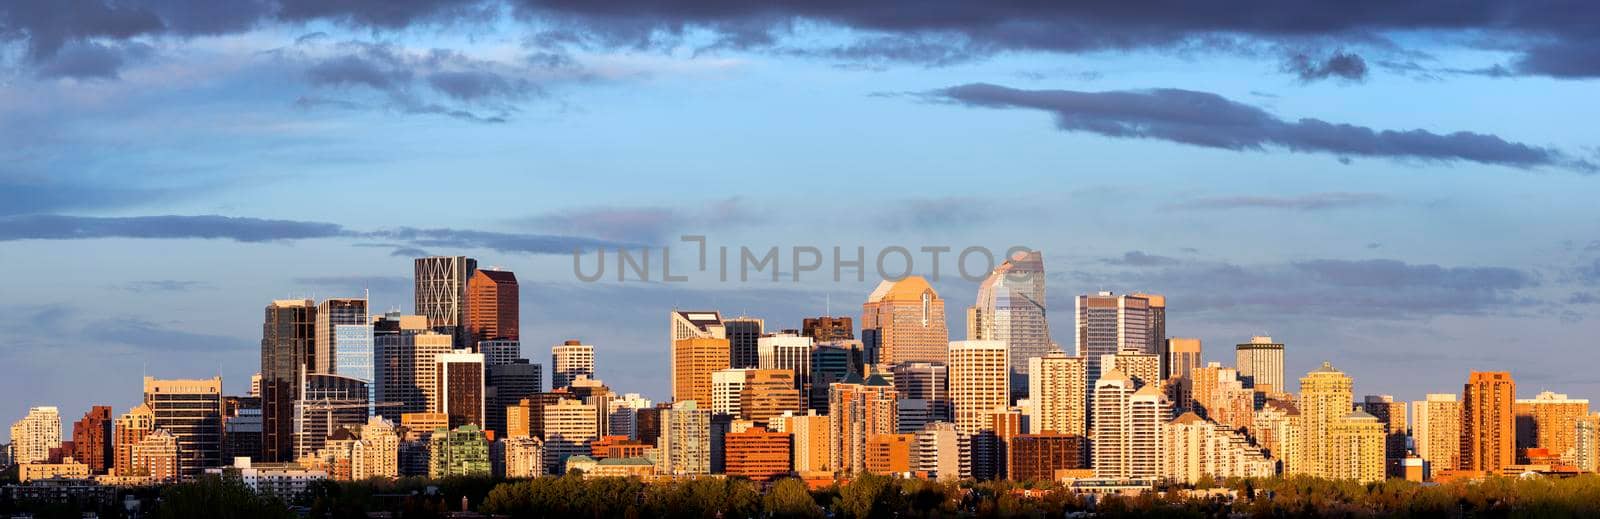 Panoramic view of Calgary. Calgary, Alberta, Canada